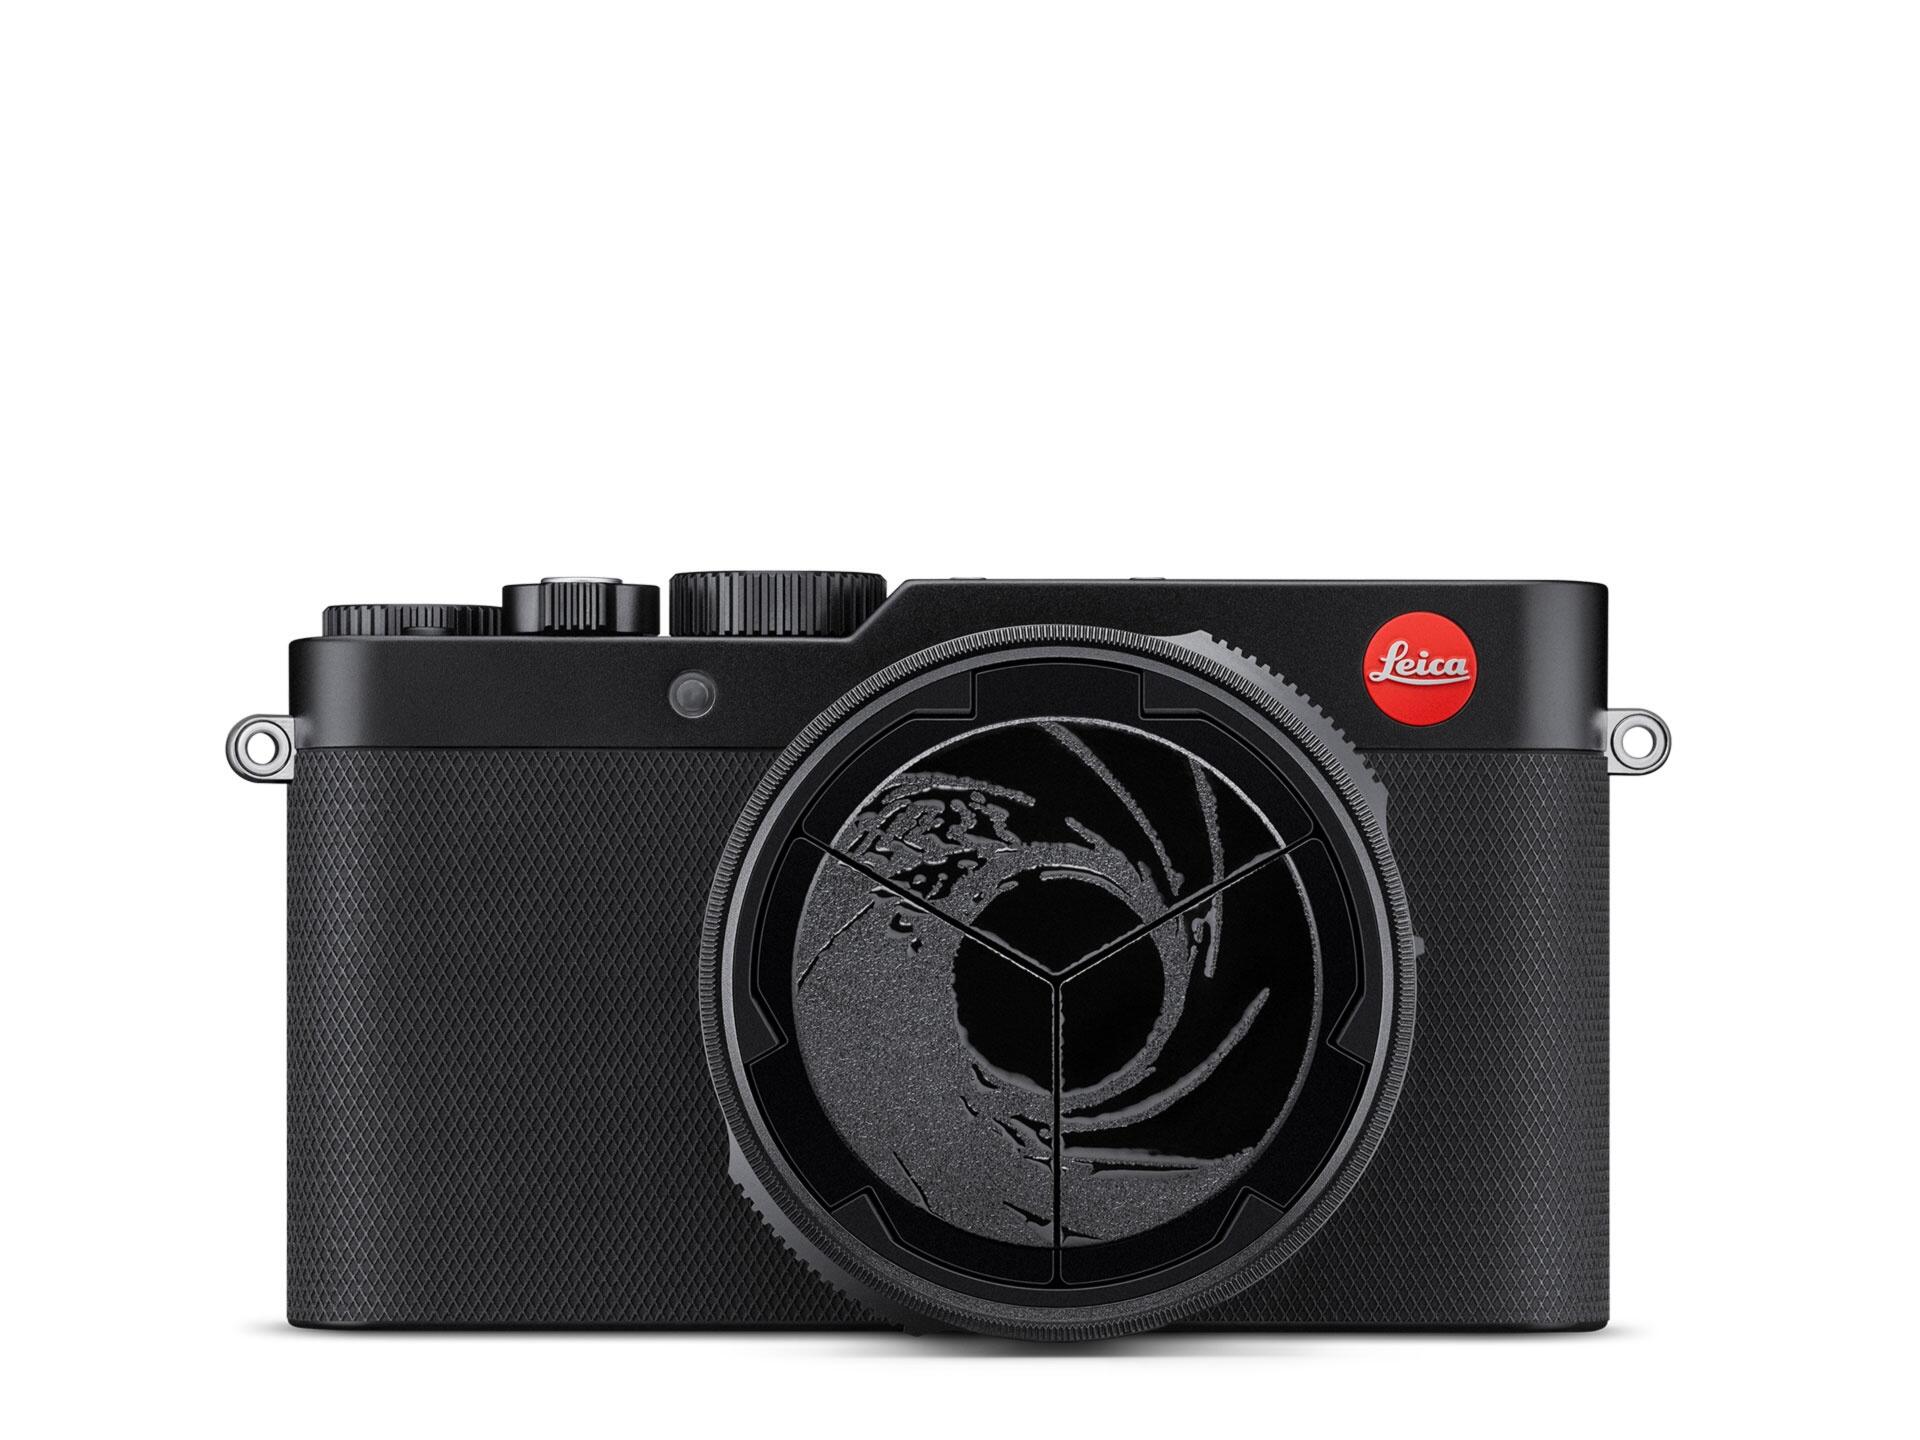 Leica D-Lux 7 007 Edition | Leica Camera JP